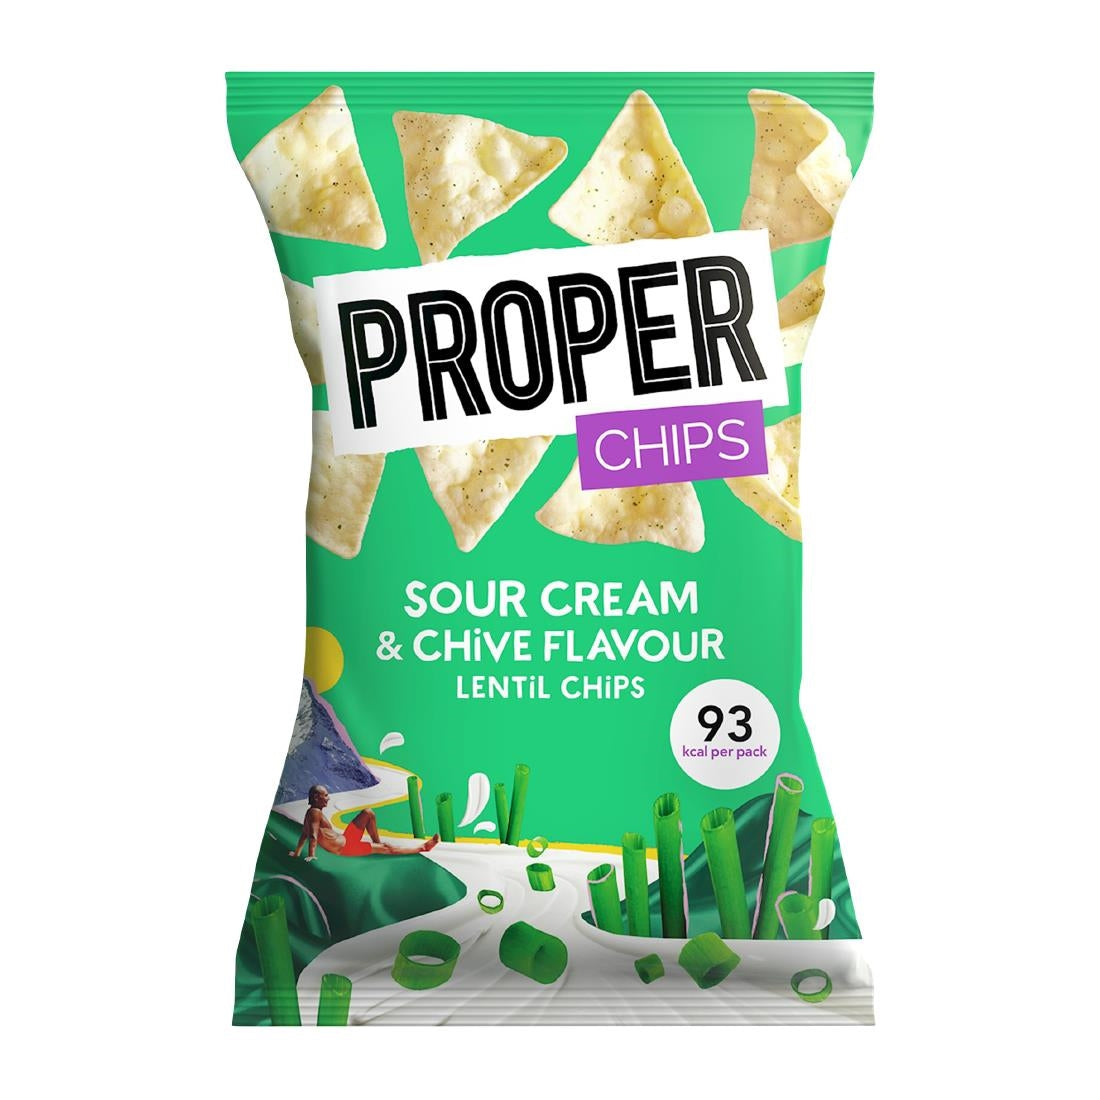 HS873 Properchips Impulse Sour Cream & Chive Lentil Chips 20g (Pack of 24)